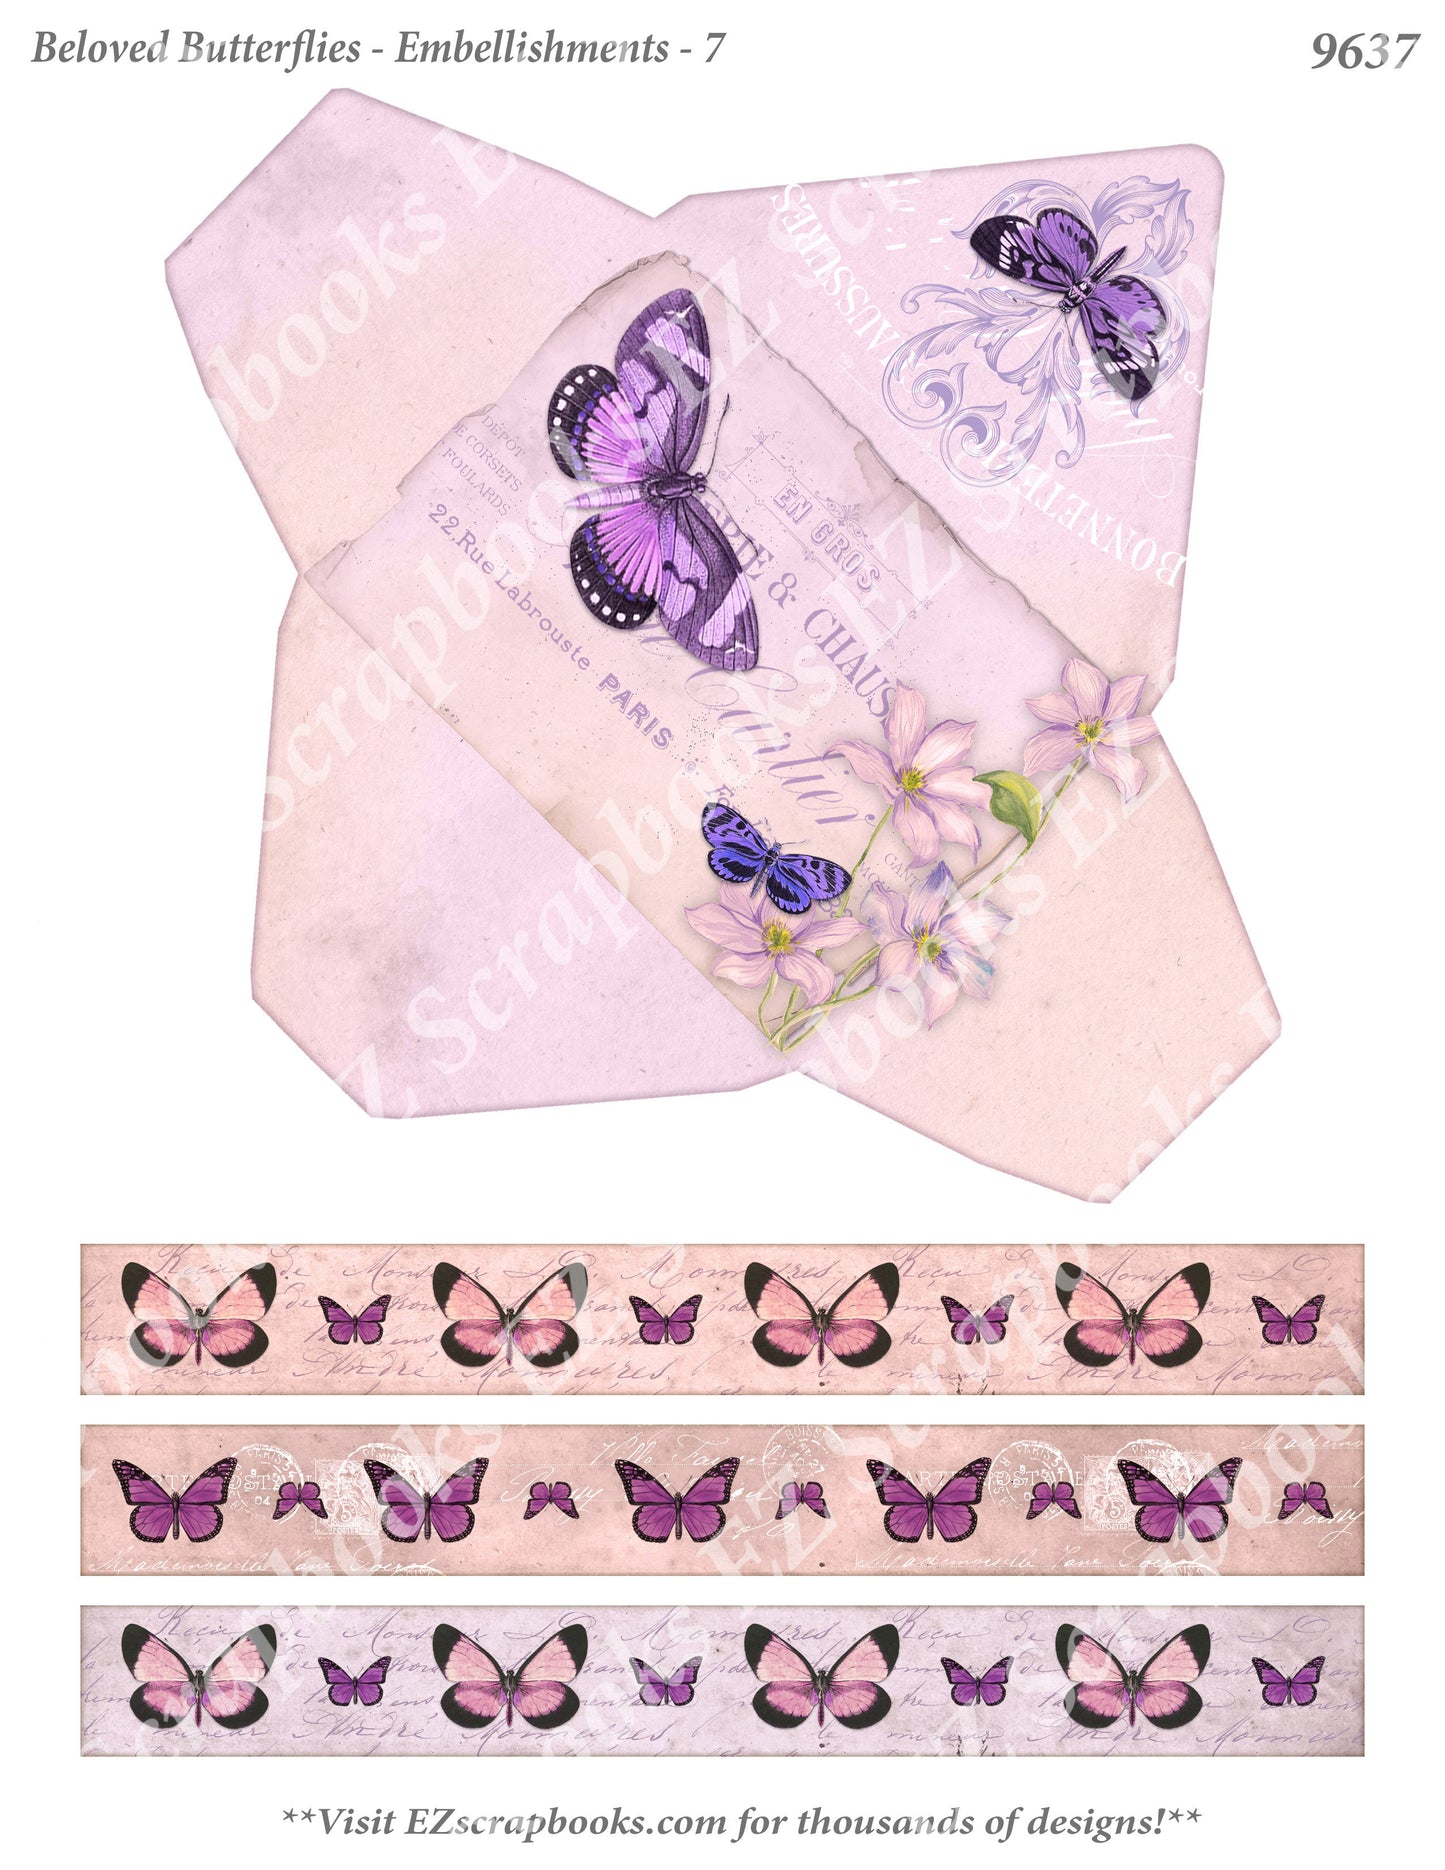 Beloved Butterflies - Embellishments - 7 - 9637